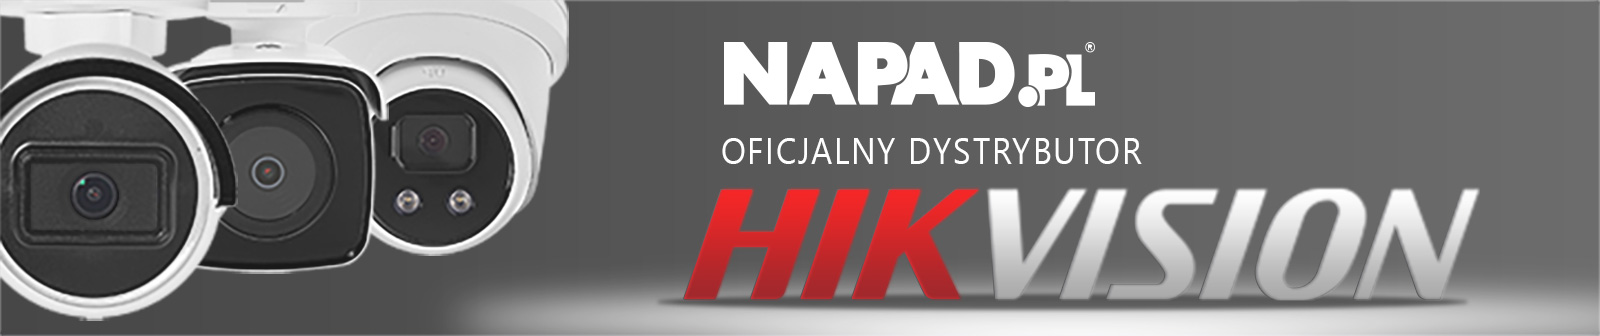 Napad.pl oficjalnym dystrybutorem produktów Hikvision.